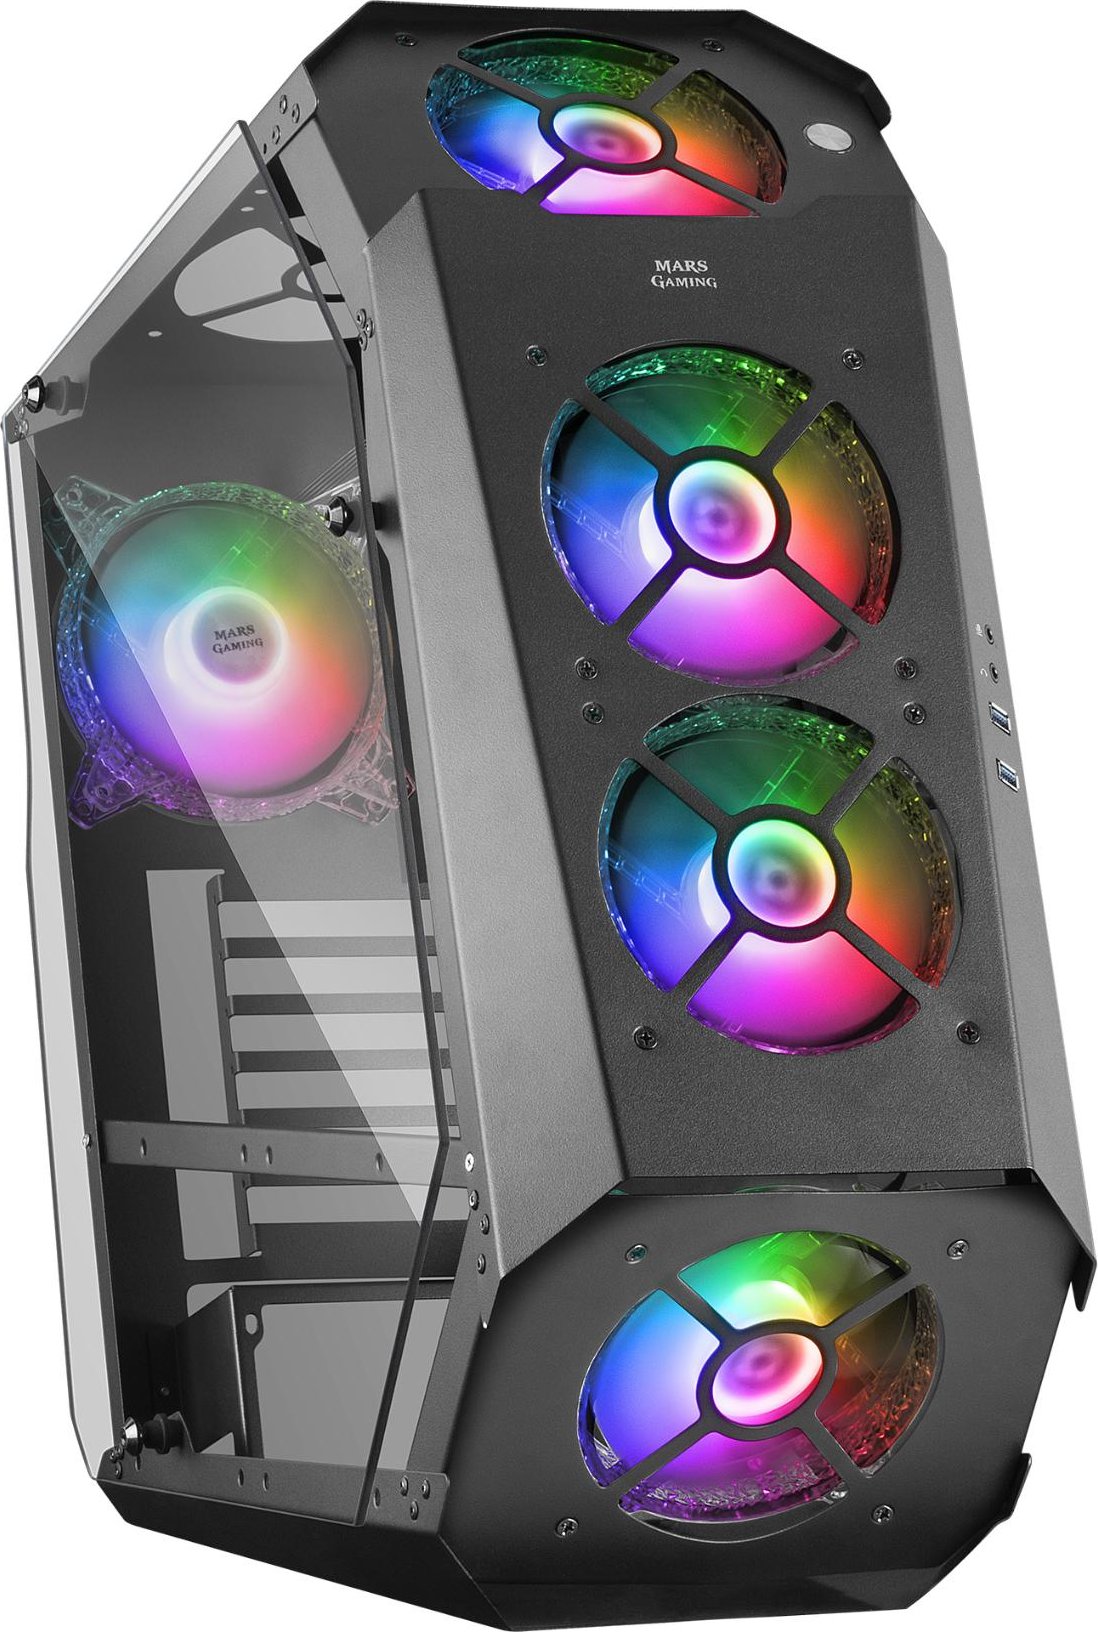 Torre Mars Gaming Custom Premium S F Atx Negra (MCB) - Innova Informática :  Carcasas formato Semitorre